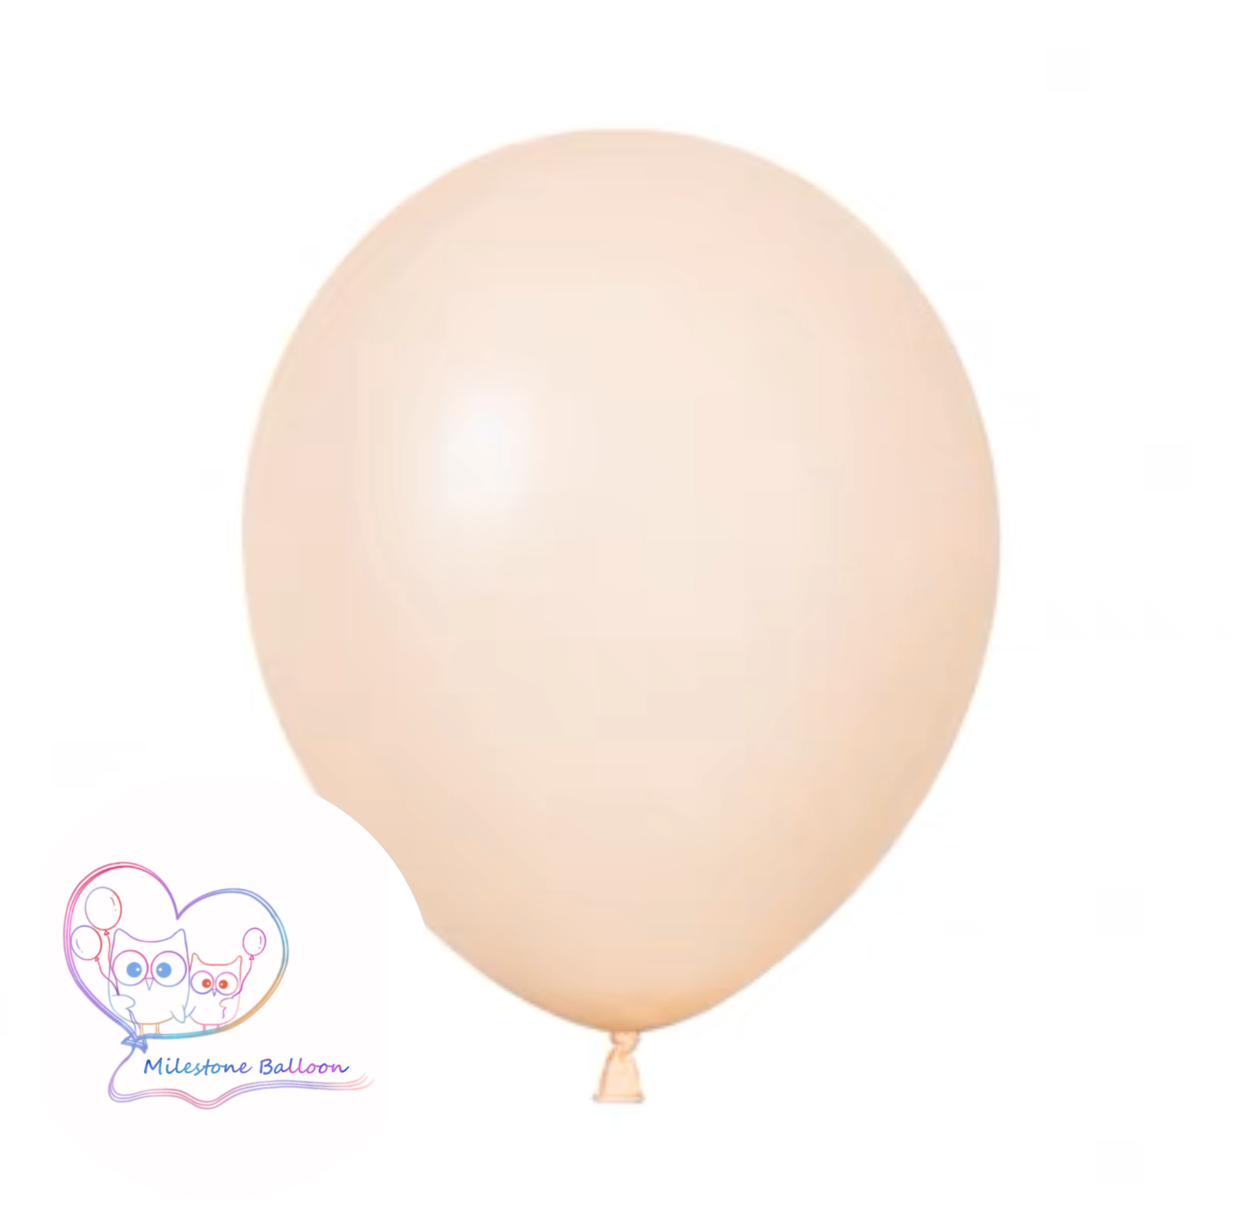 5吋氣球 (膚色) (1pc) 5LB16